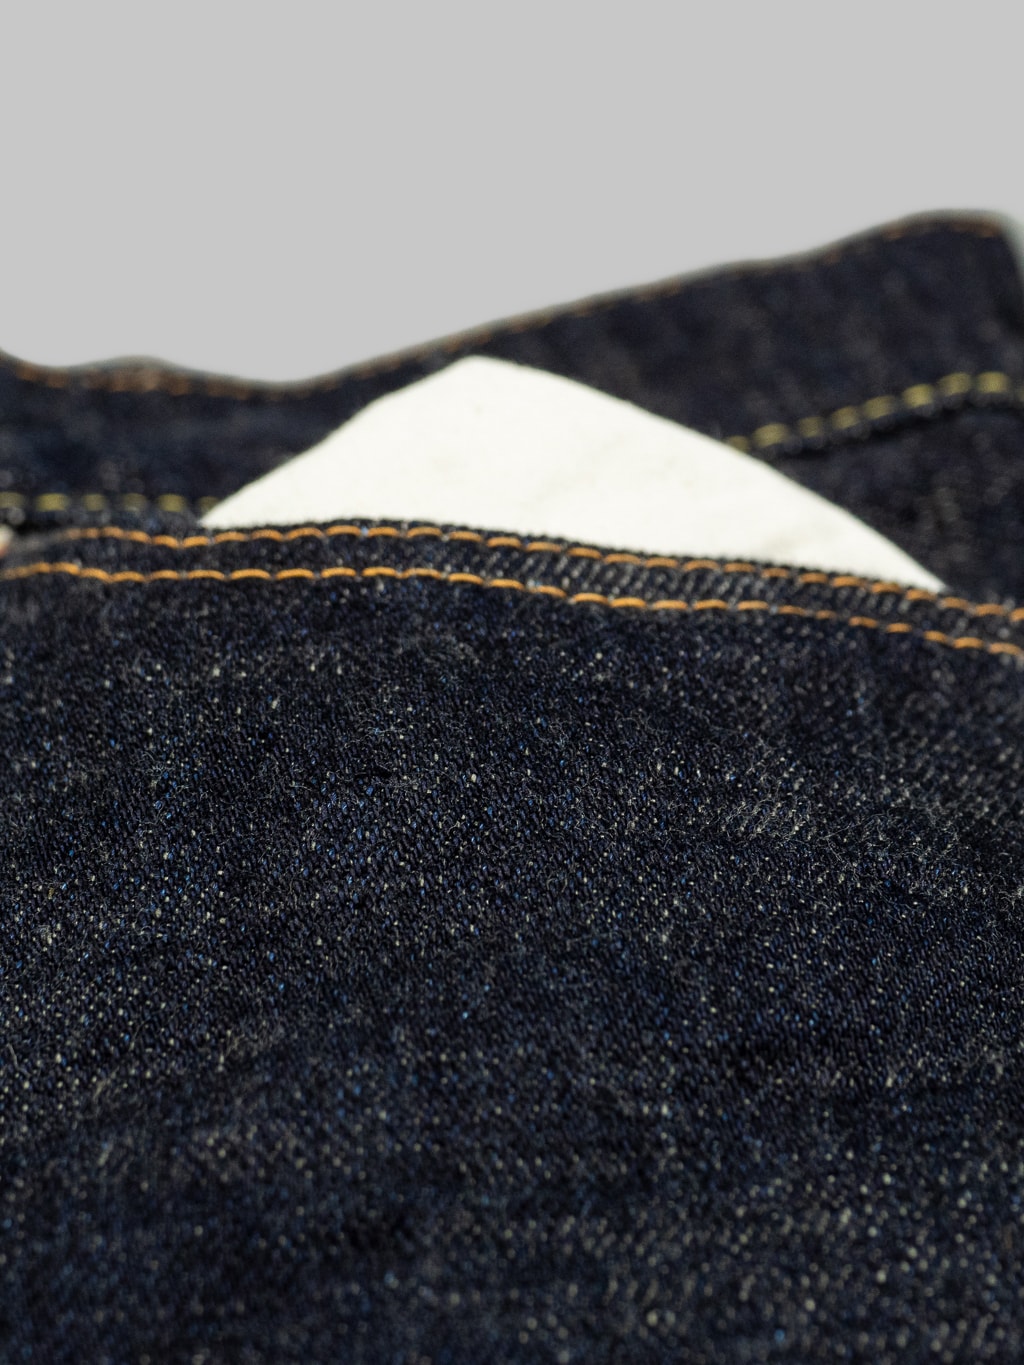 The Strike Gold Slub Weft Slim Jeans fit pocket fabric